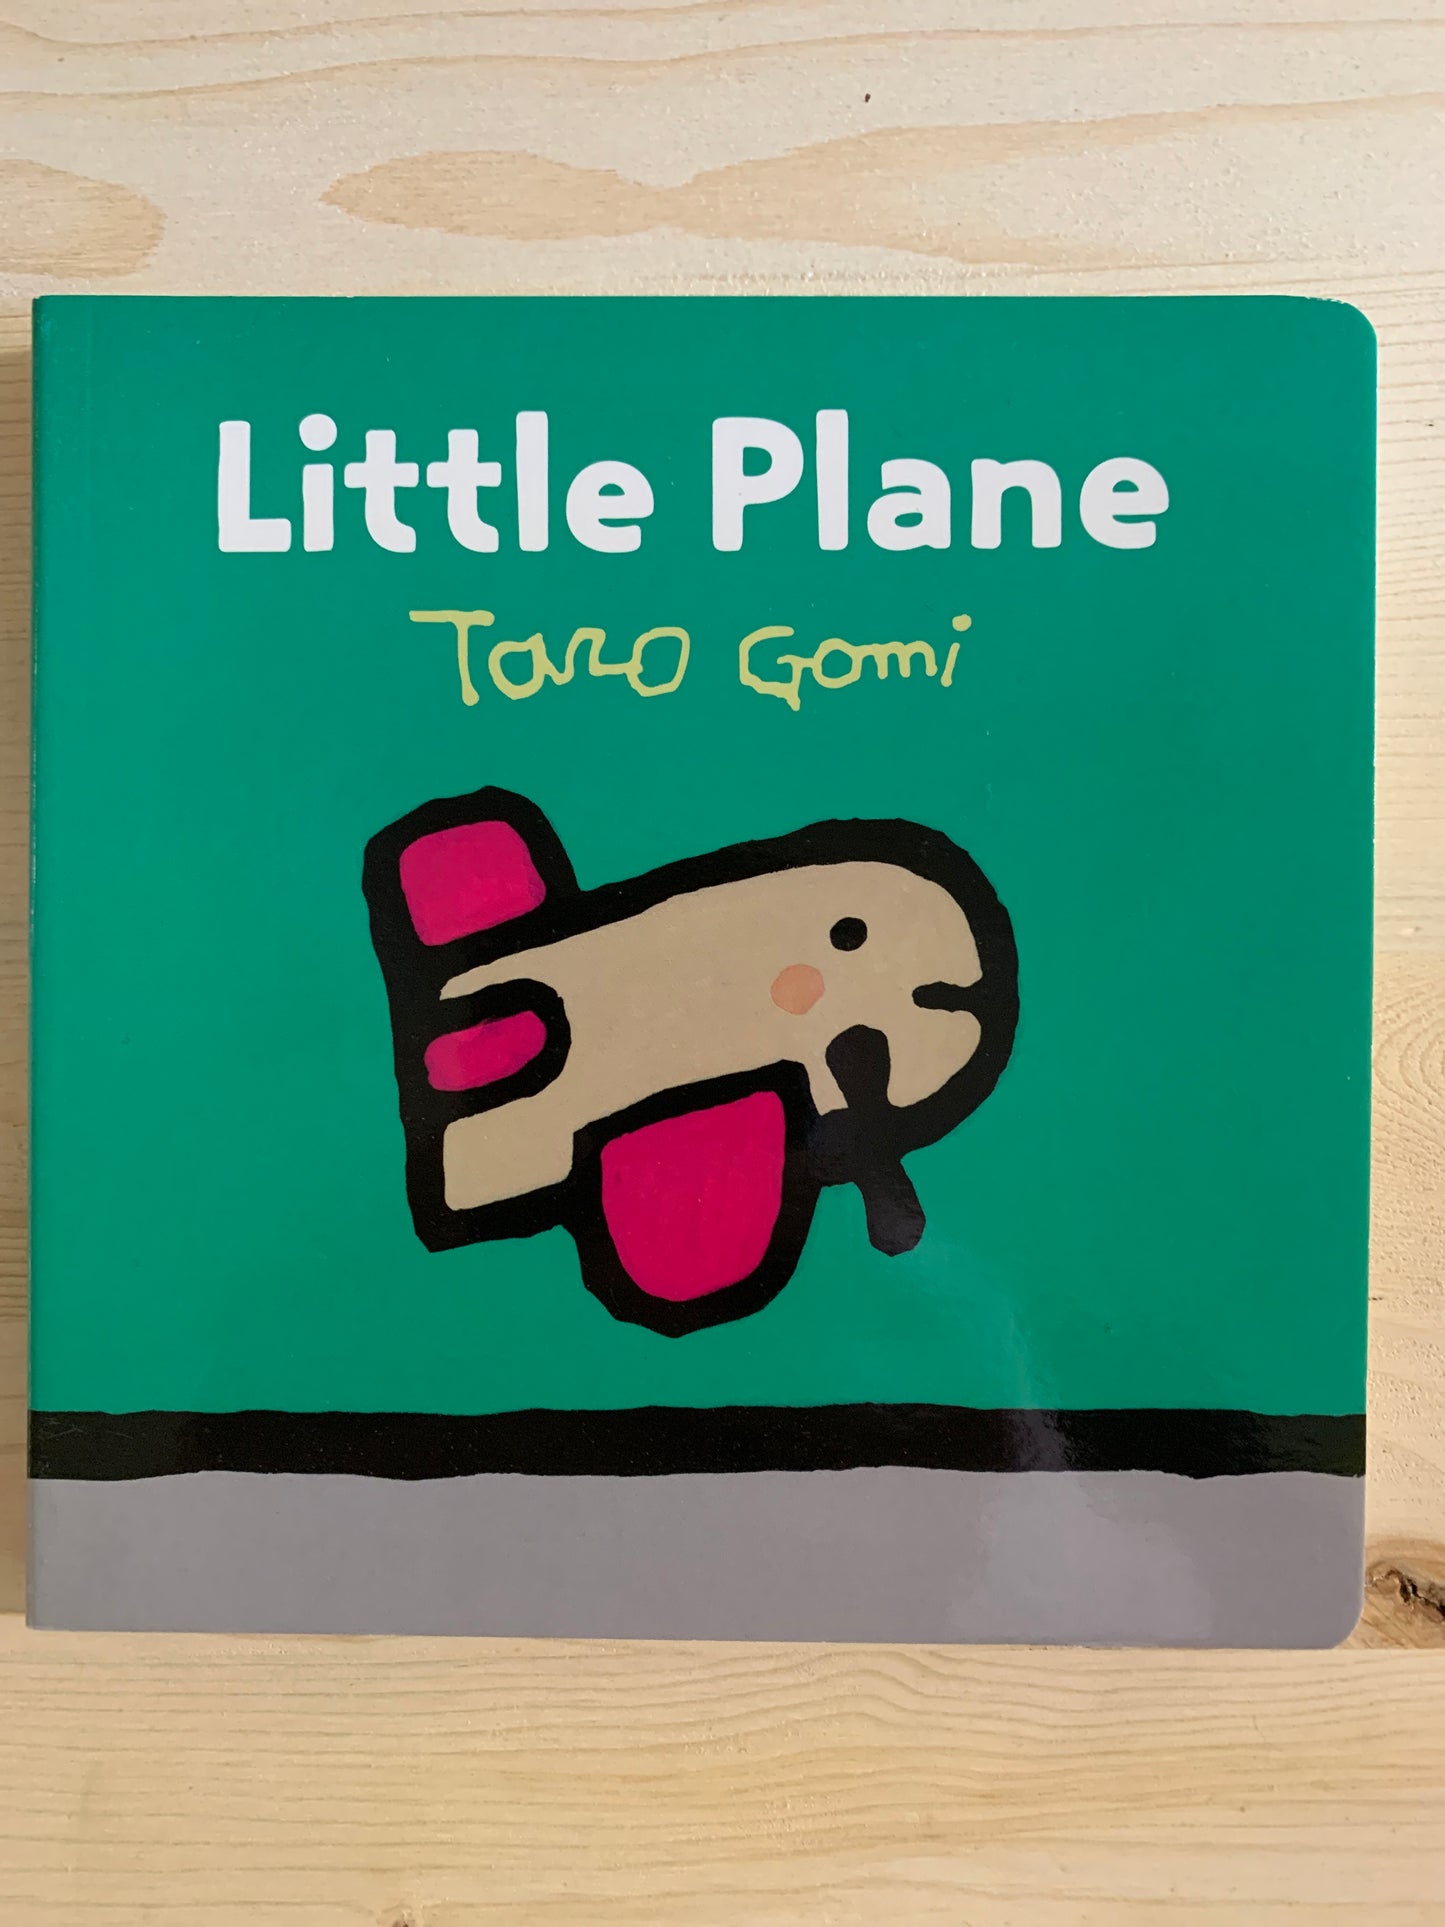 Little Plane